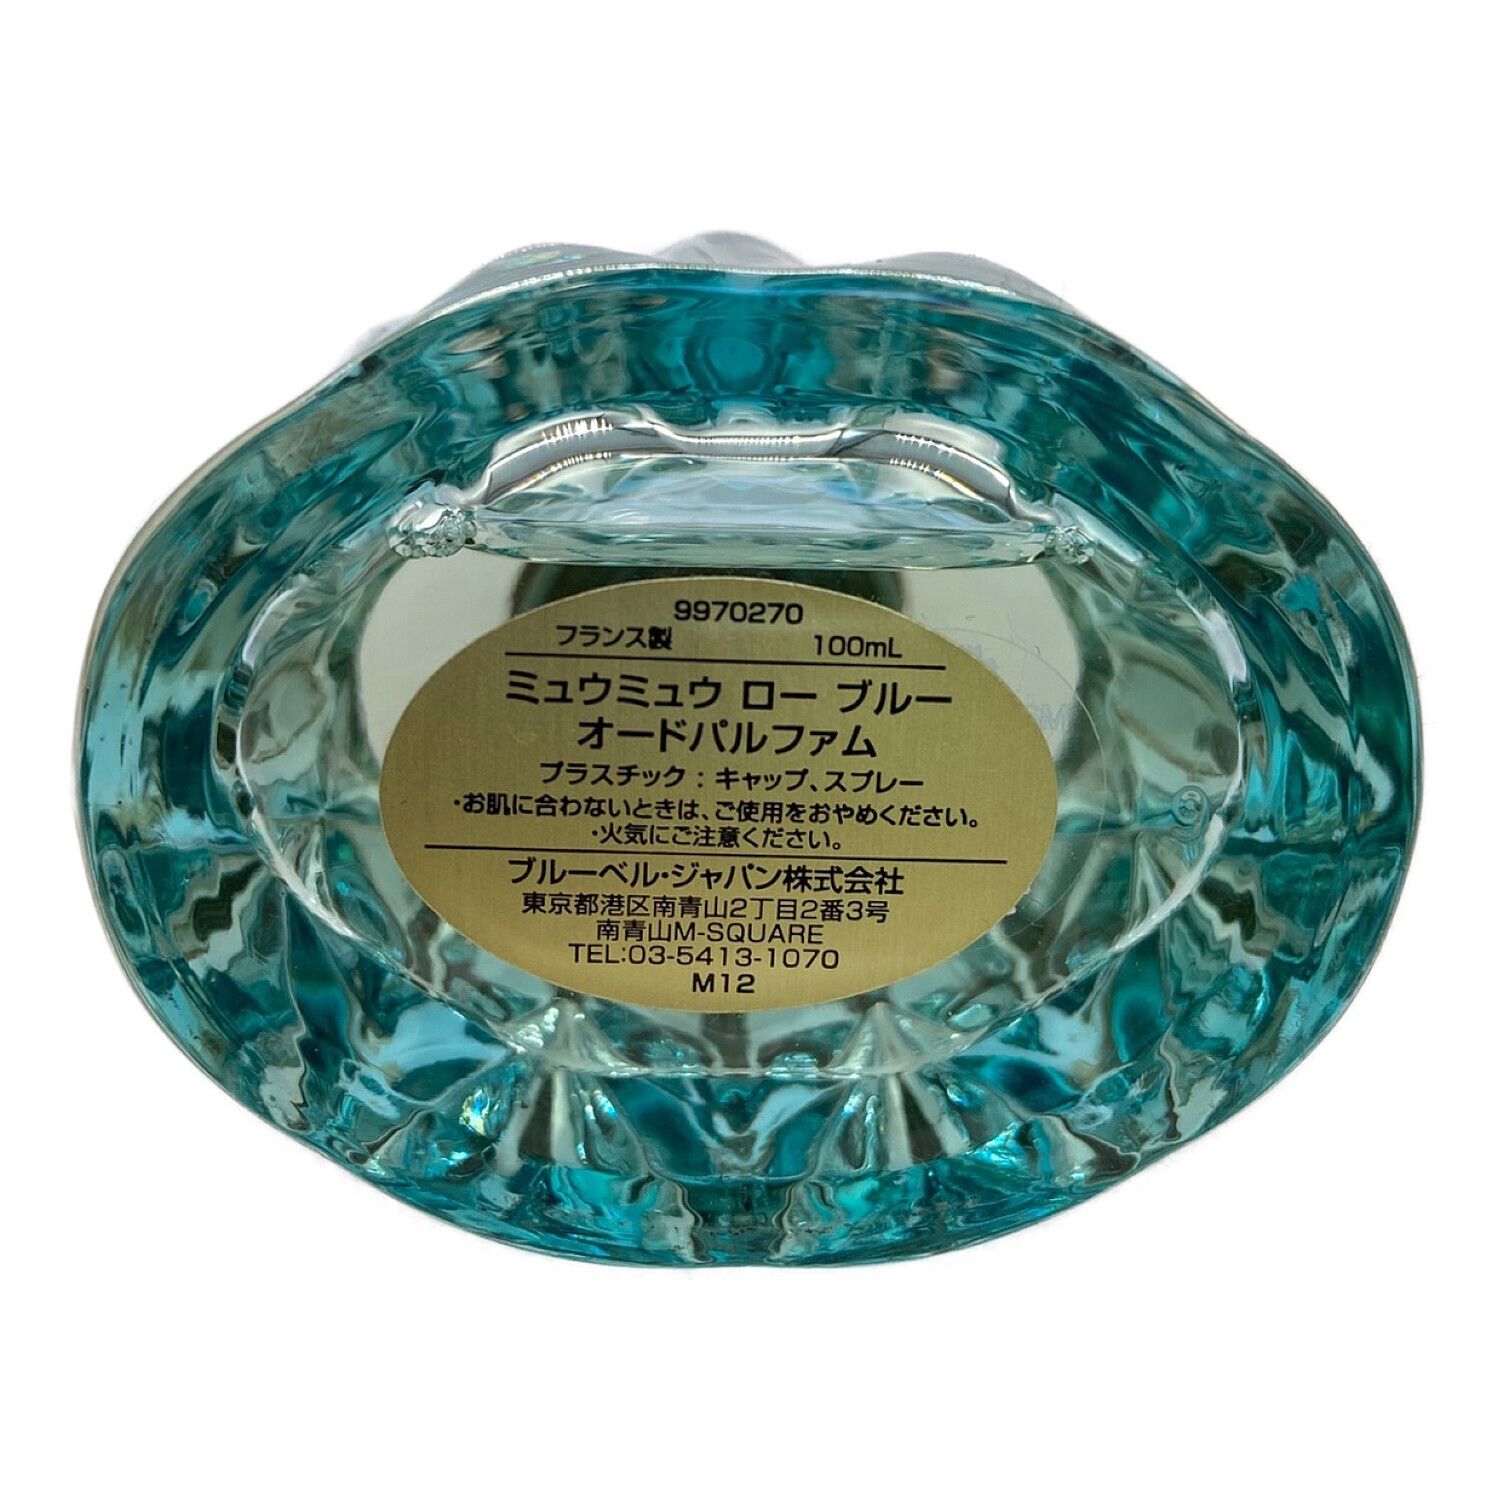 MIU MIU (ミュウミュウ) 香水 ローブルー オードパルファム/100ml